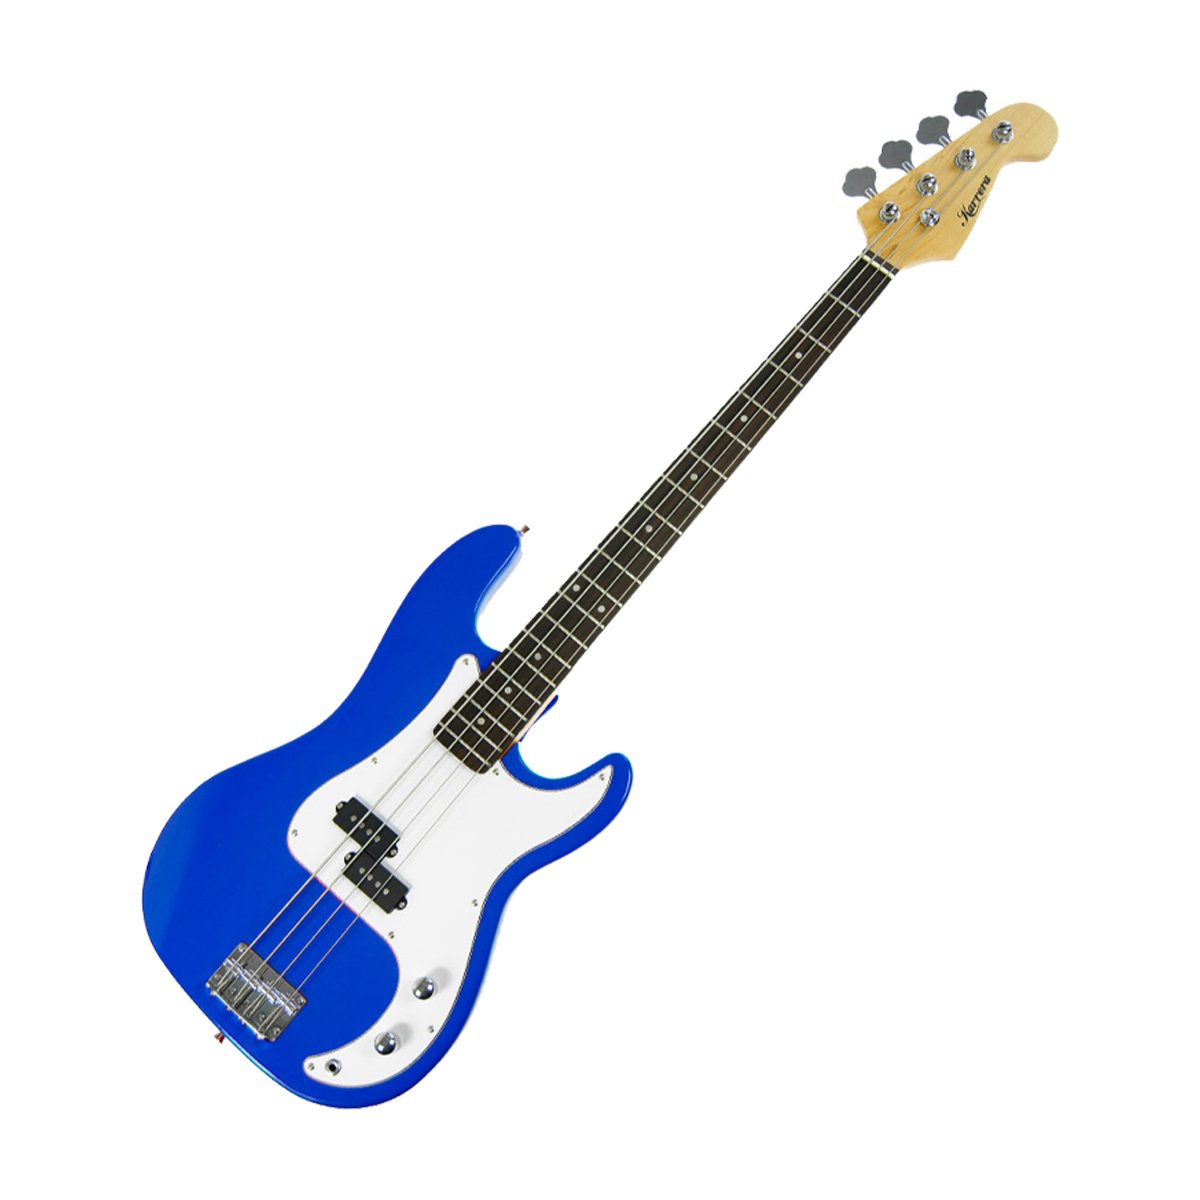 Karrera Electric Bass Guitar Pack - Blue 1